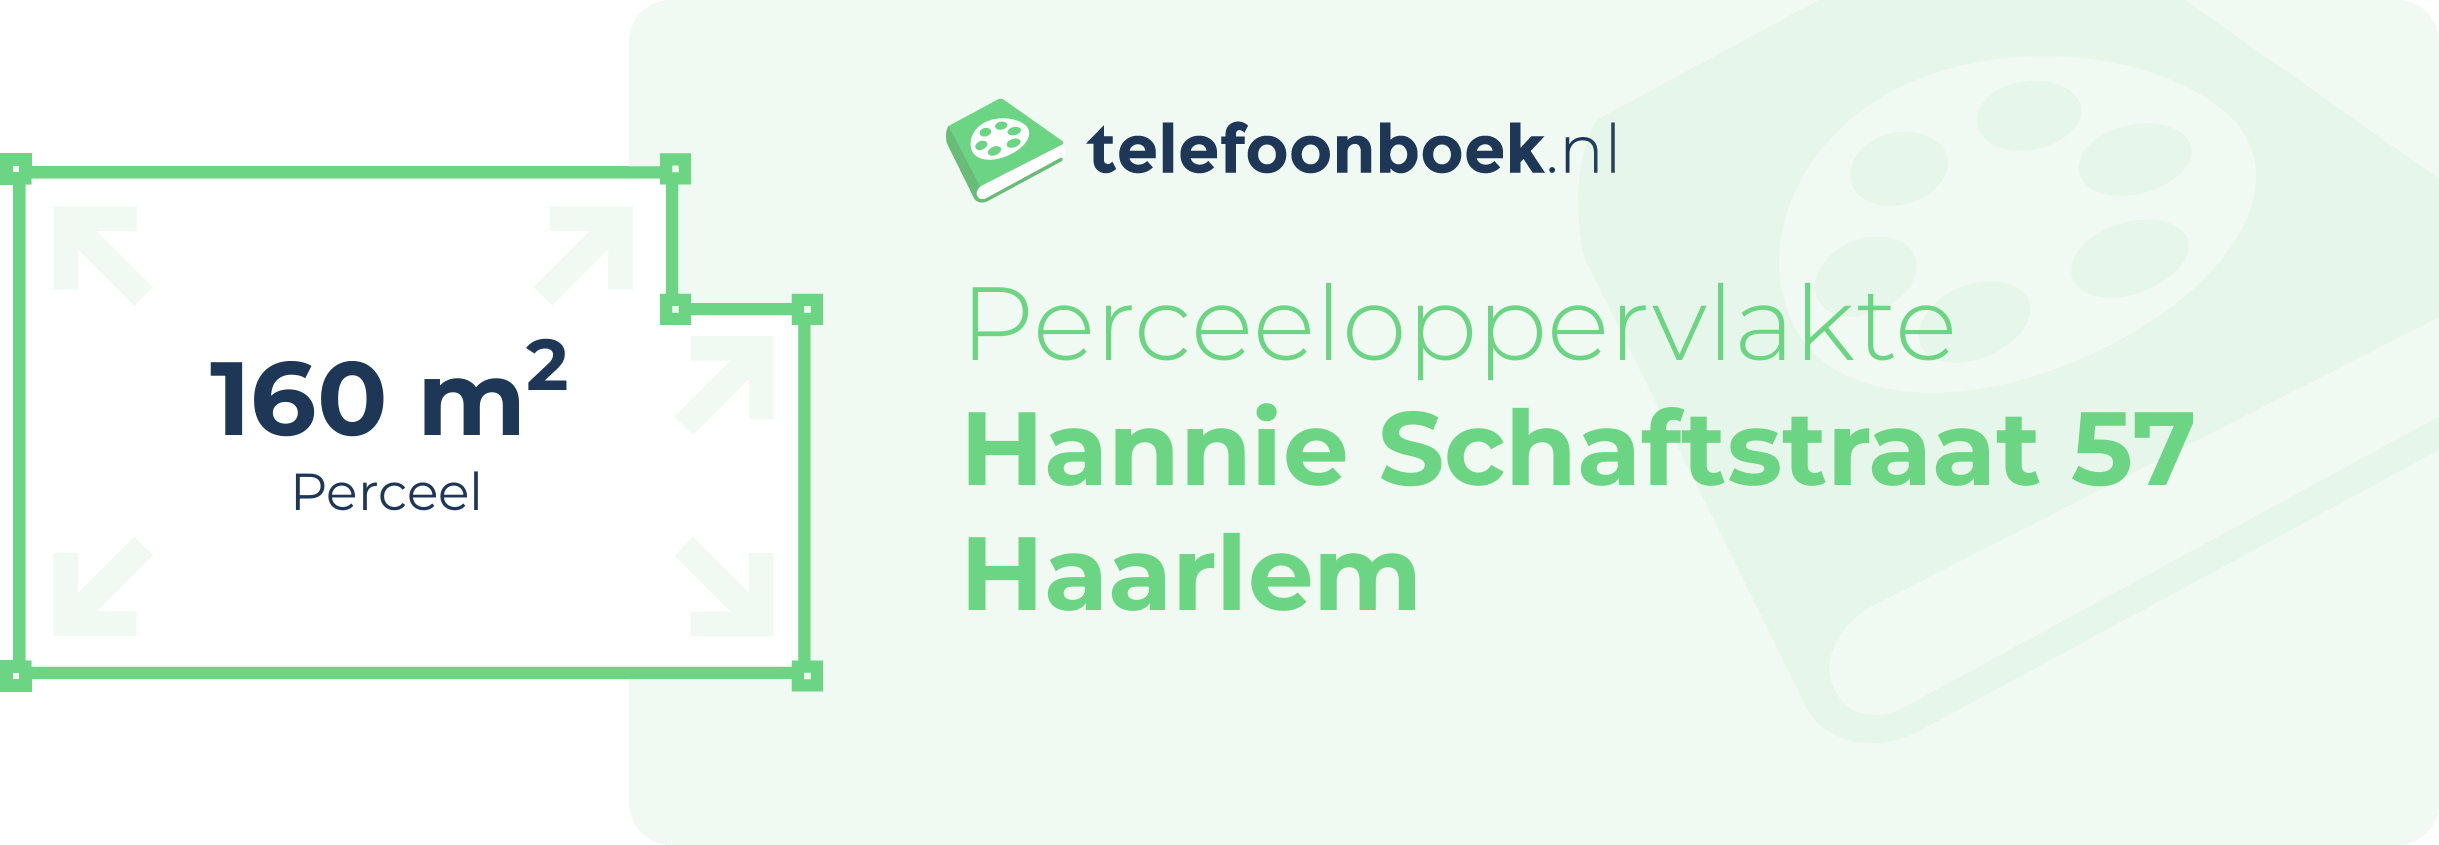 Perceeloppervlakte Hannie Schaftstraat 57 Haarlem